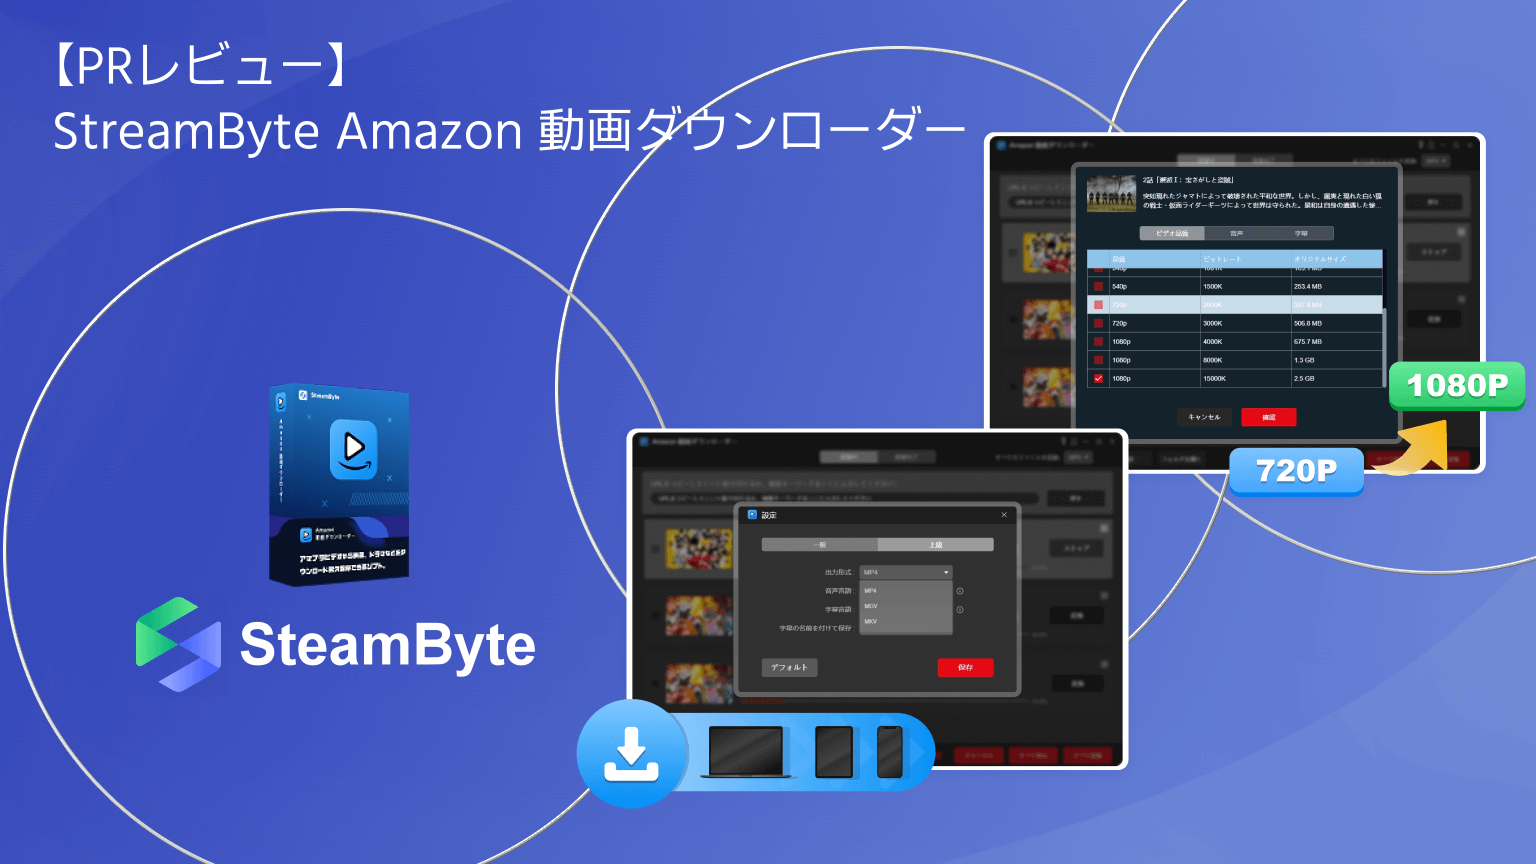 【PRレビュー】StreamByte Amazon 動画ダウンローダー